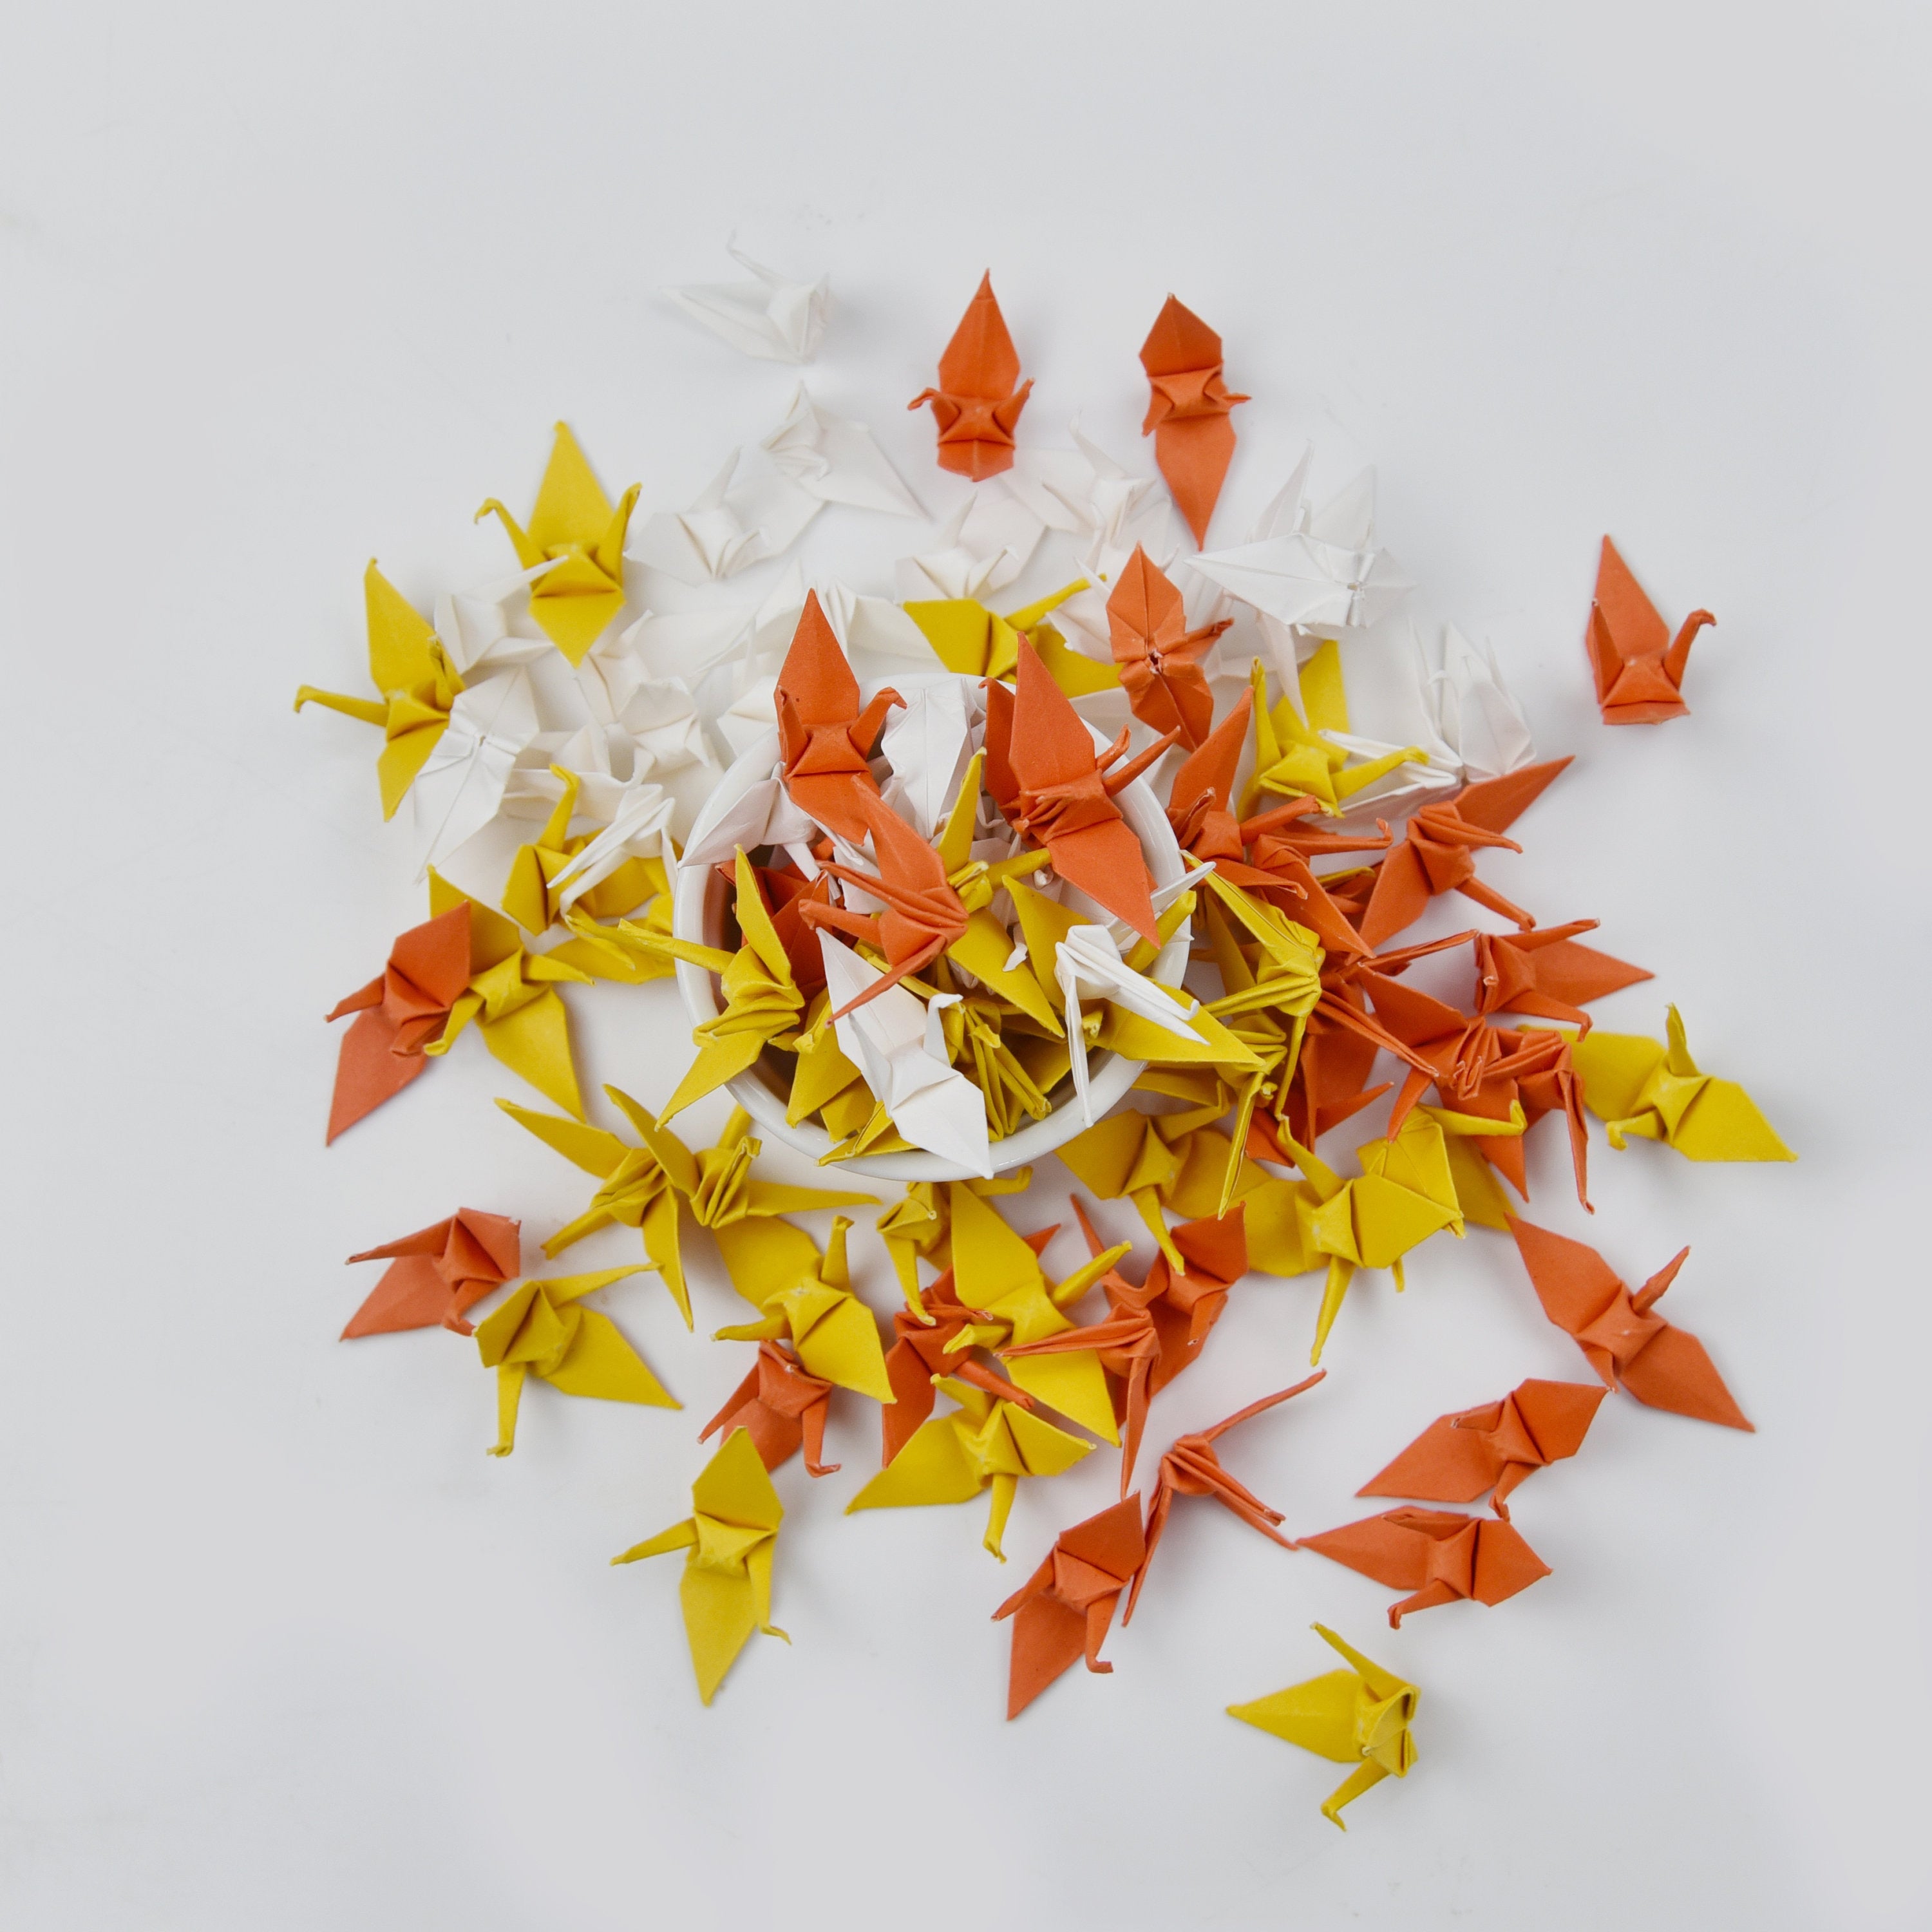 1000 Origami Paper Crane for Sale - 1.5 inches - Ivory Orange Tone Japanese - for Wedding Gift, Decoration, Wedding Backdrop